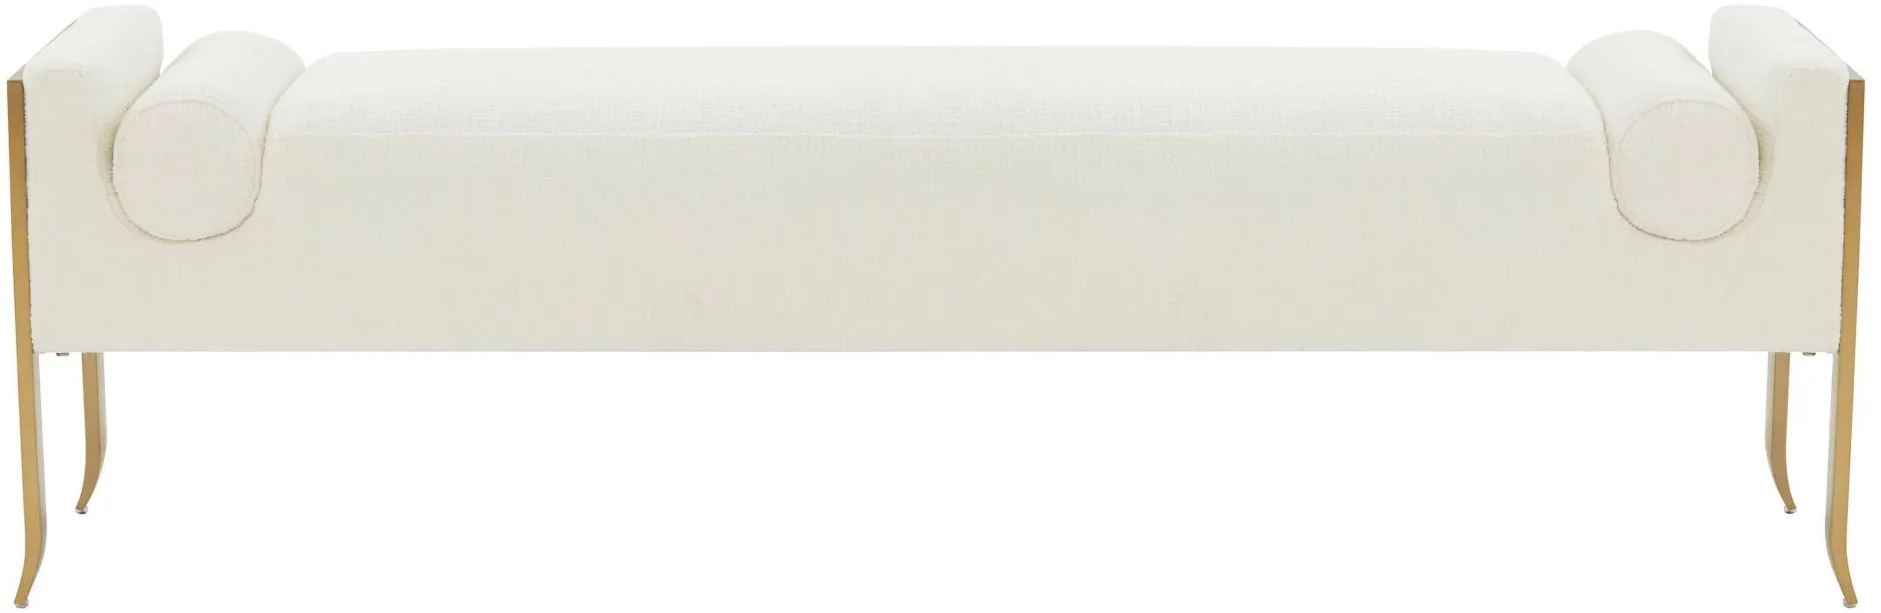 Ines Textured Velvet Bench in Cream by Tov Furniture